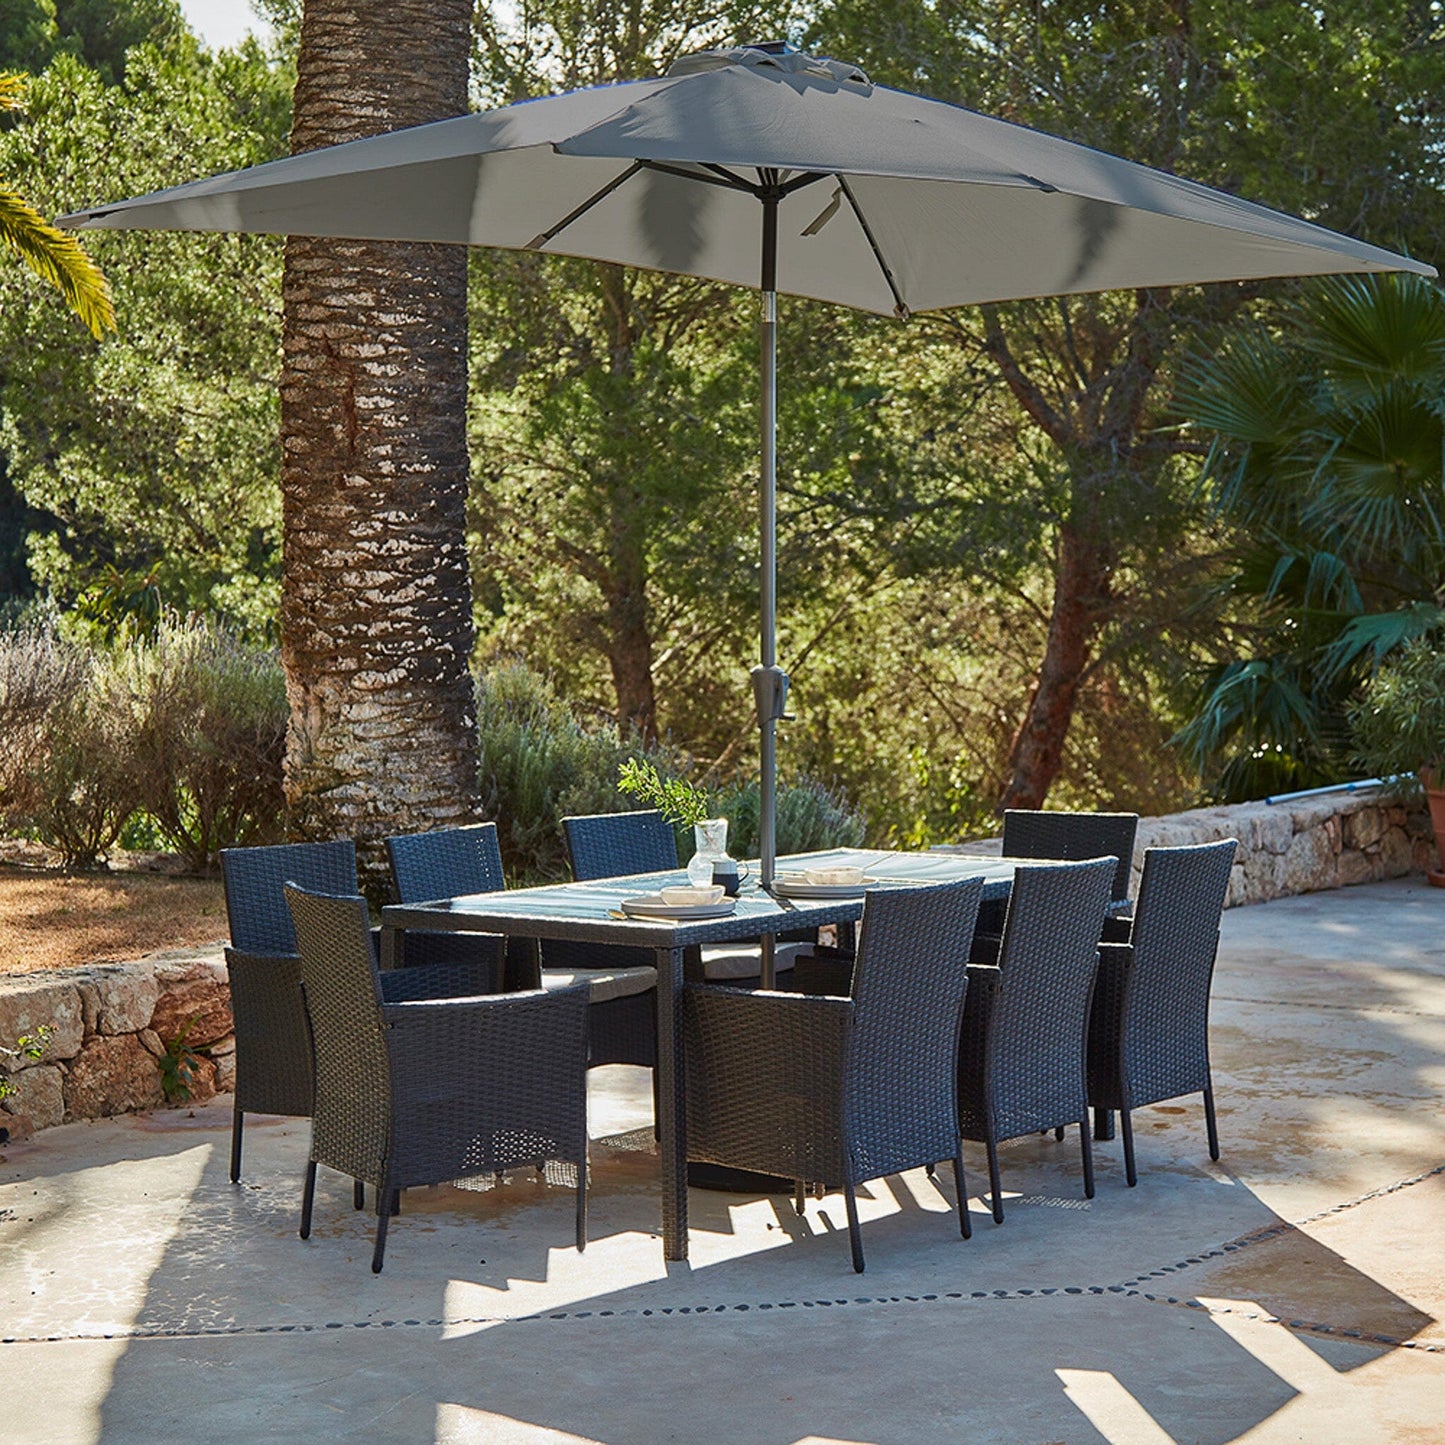 Marston 8 Seater Rattan Dining Set with Grey Parasol - Rattan Garden Furniture - Black